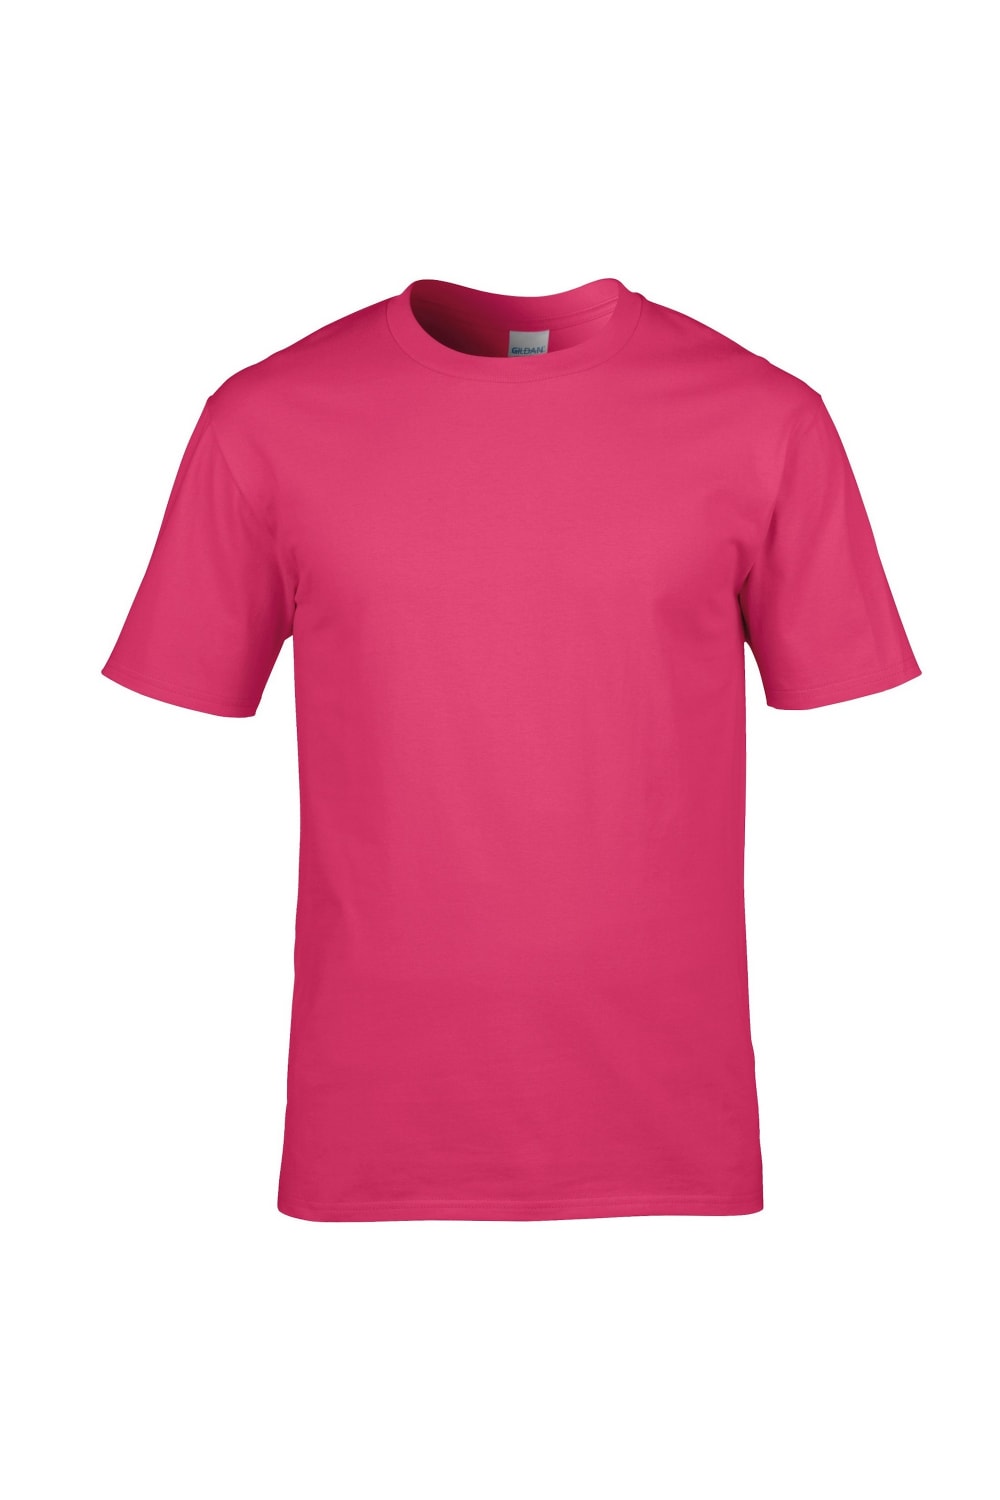 Gildan Mens Premium Cotton Ring Spun Short Sleeve T-Shirt (Heliconia)